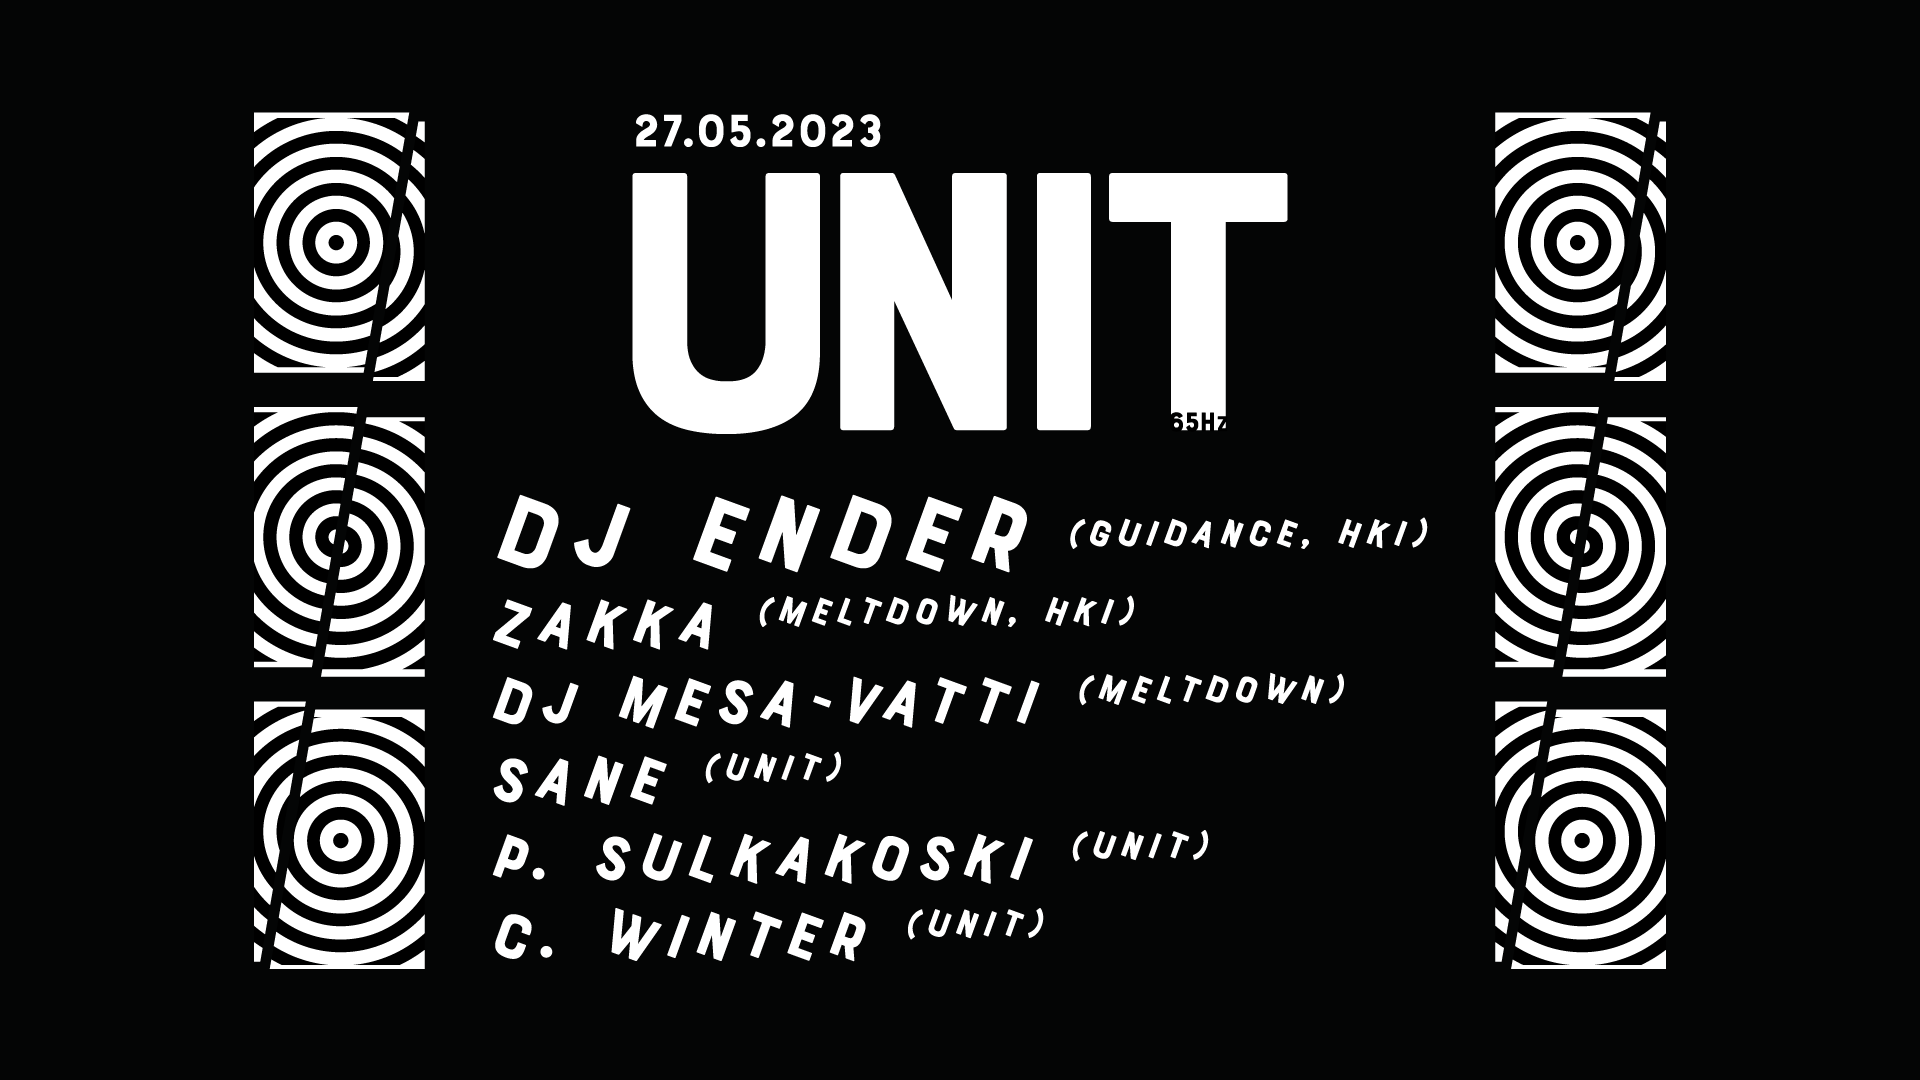 UNIT: DJ Ender & Folks, 27.05.2023 VAASA,FI